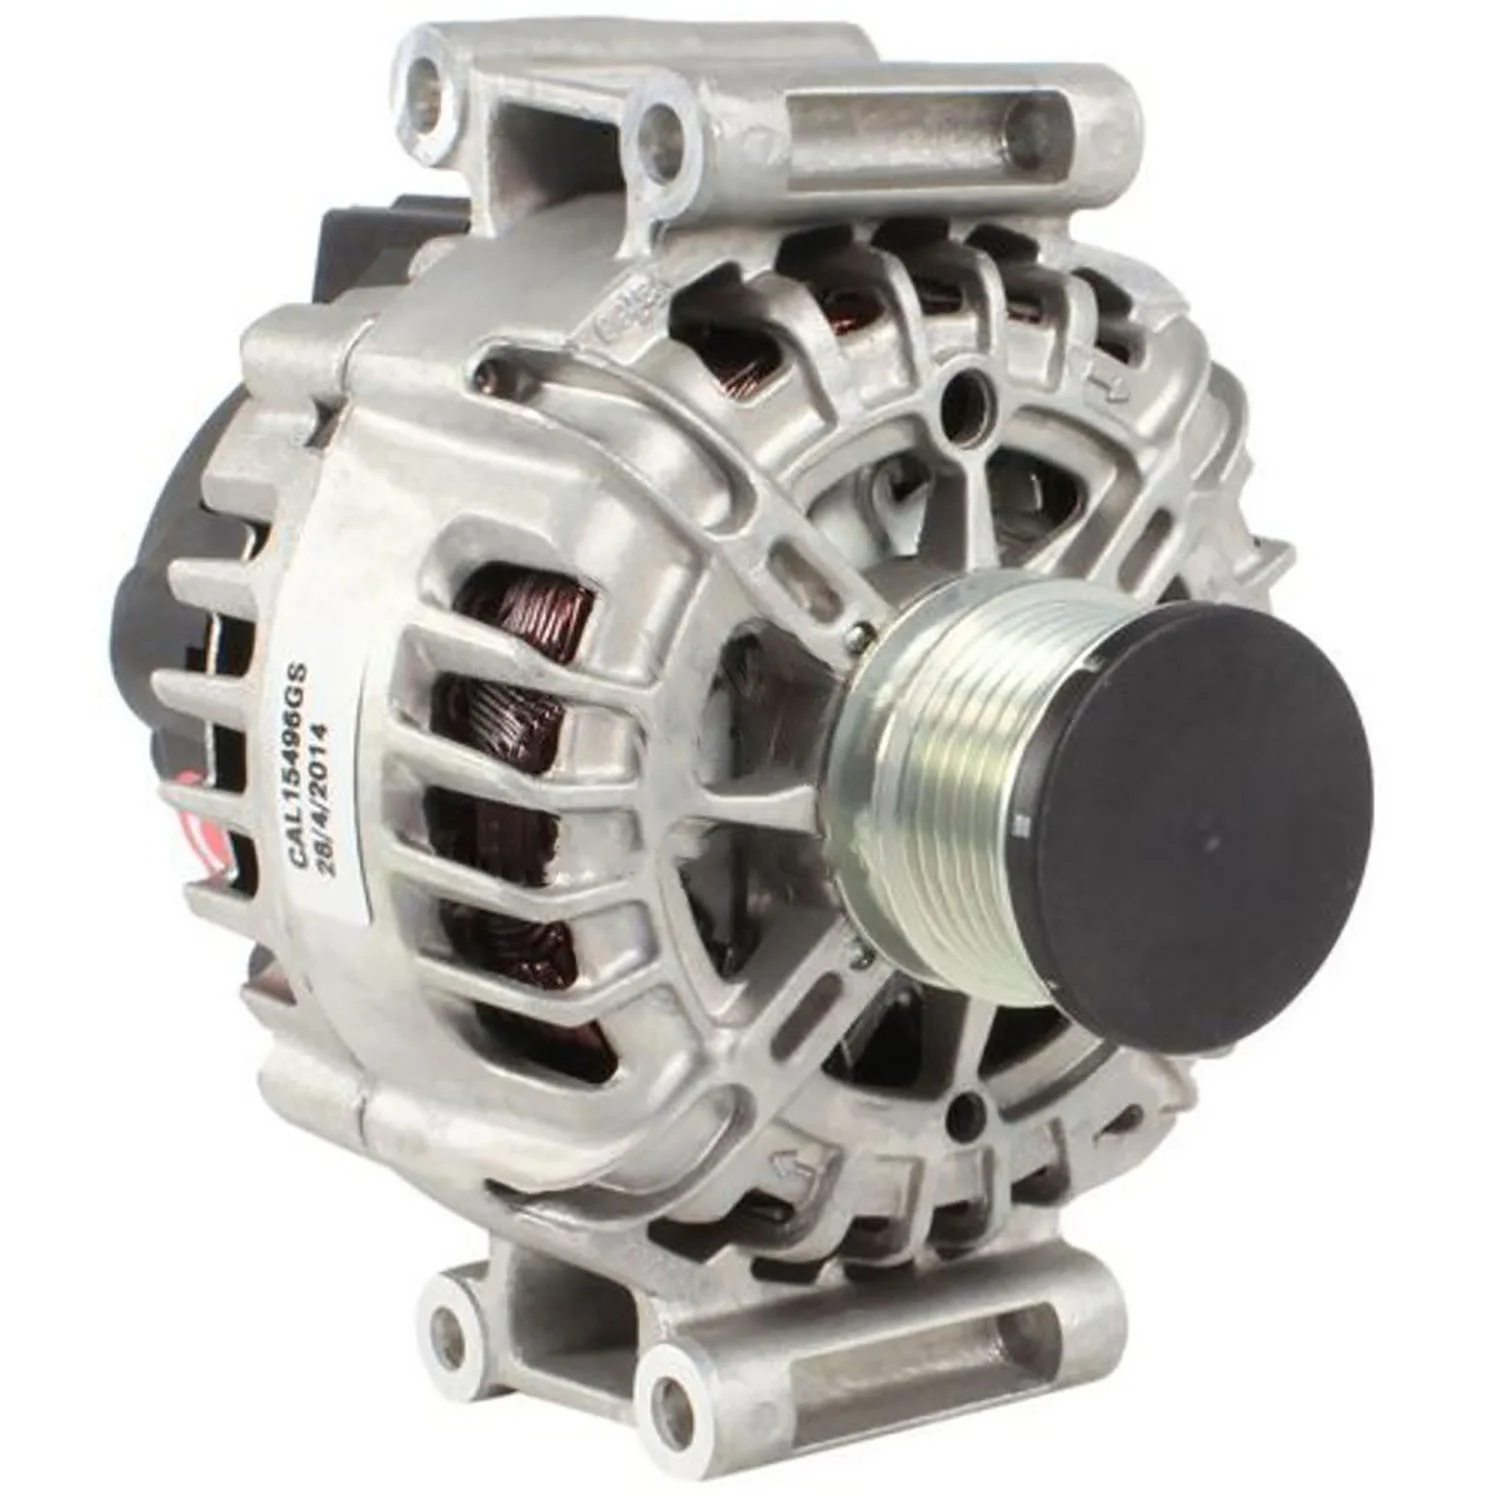 

Auto Dynamo Alternator Generator FOR Delco MercedeBenz VLEO 12V 150A ALV0467BS ALV0467DD ALV0467GB ALV0467UX 0009063000 FG15T036